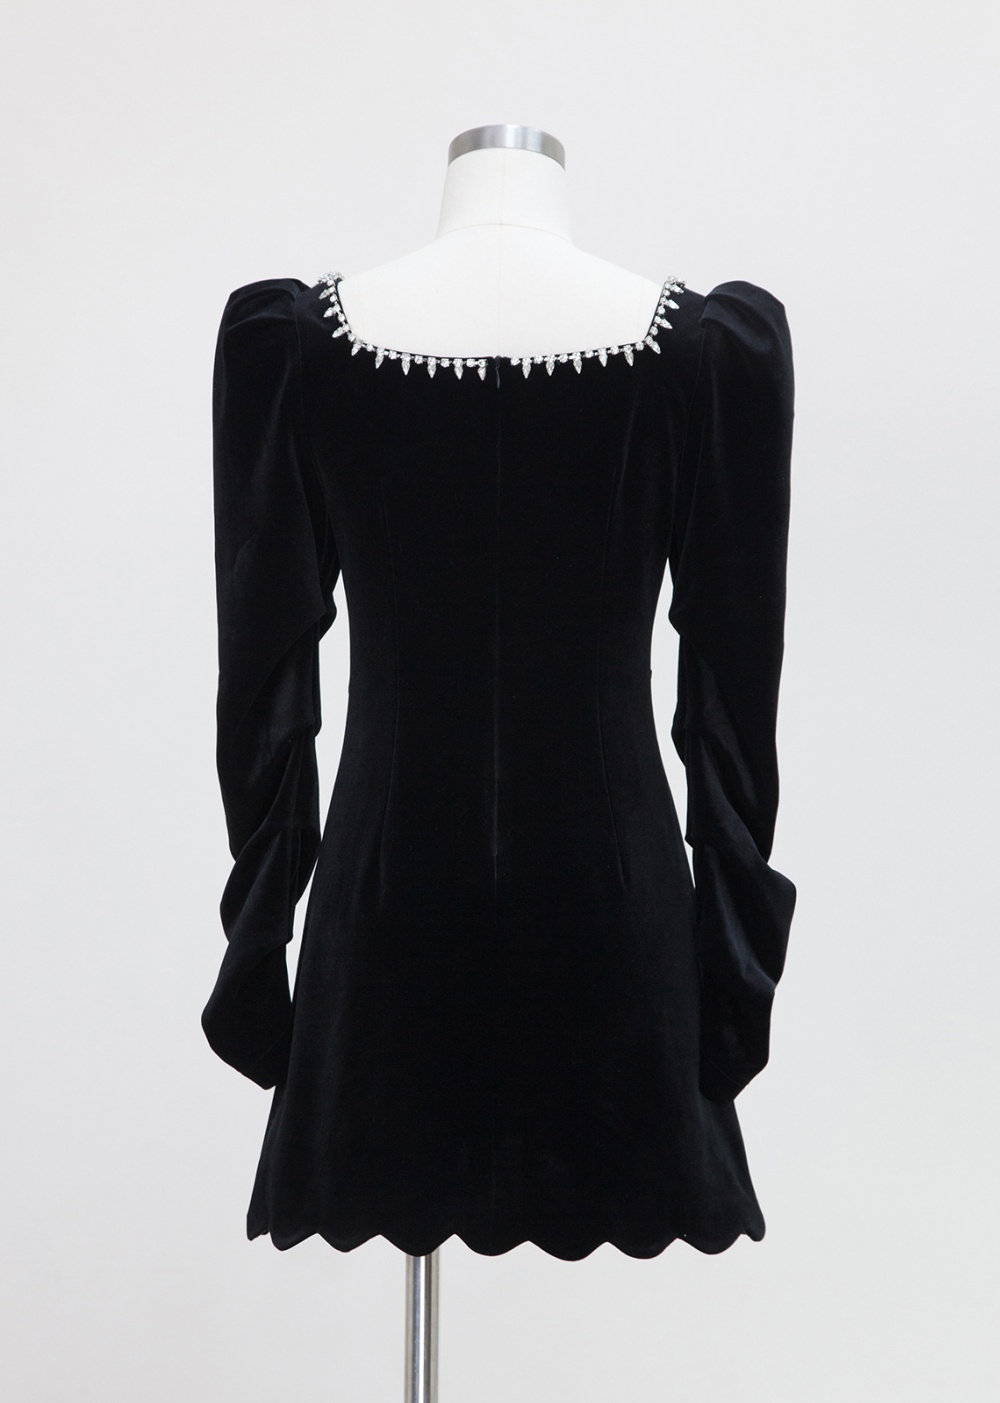 Slim long sleeve winter temperament retro black dress